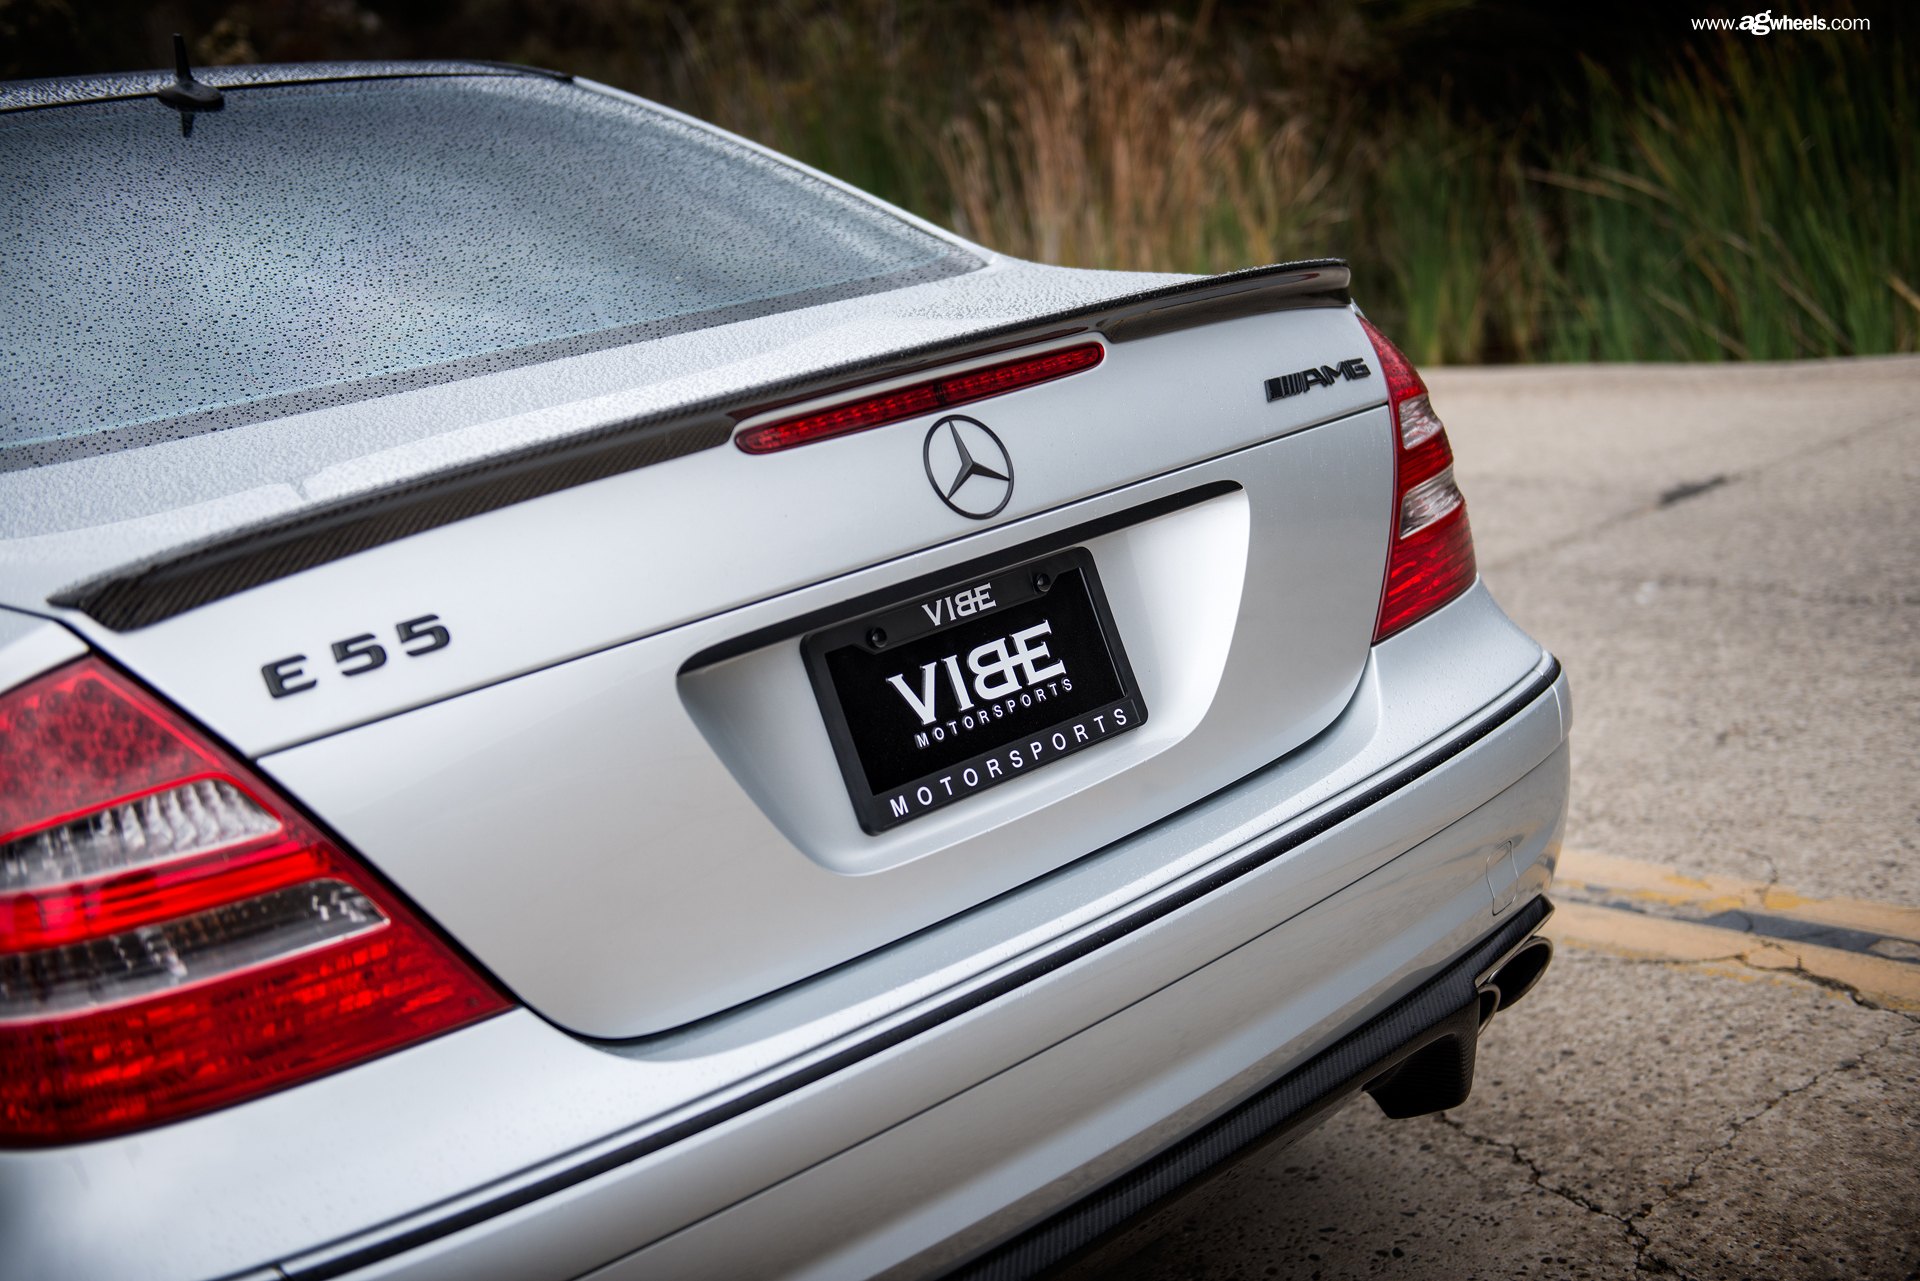 Carbon Fiber Rear Spoiler on Silver Mercedes E-Class - Photo by Avant Garde Wheels